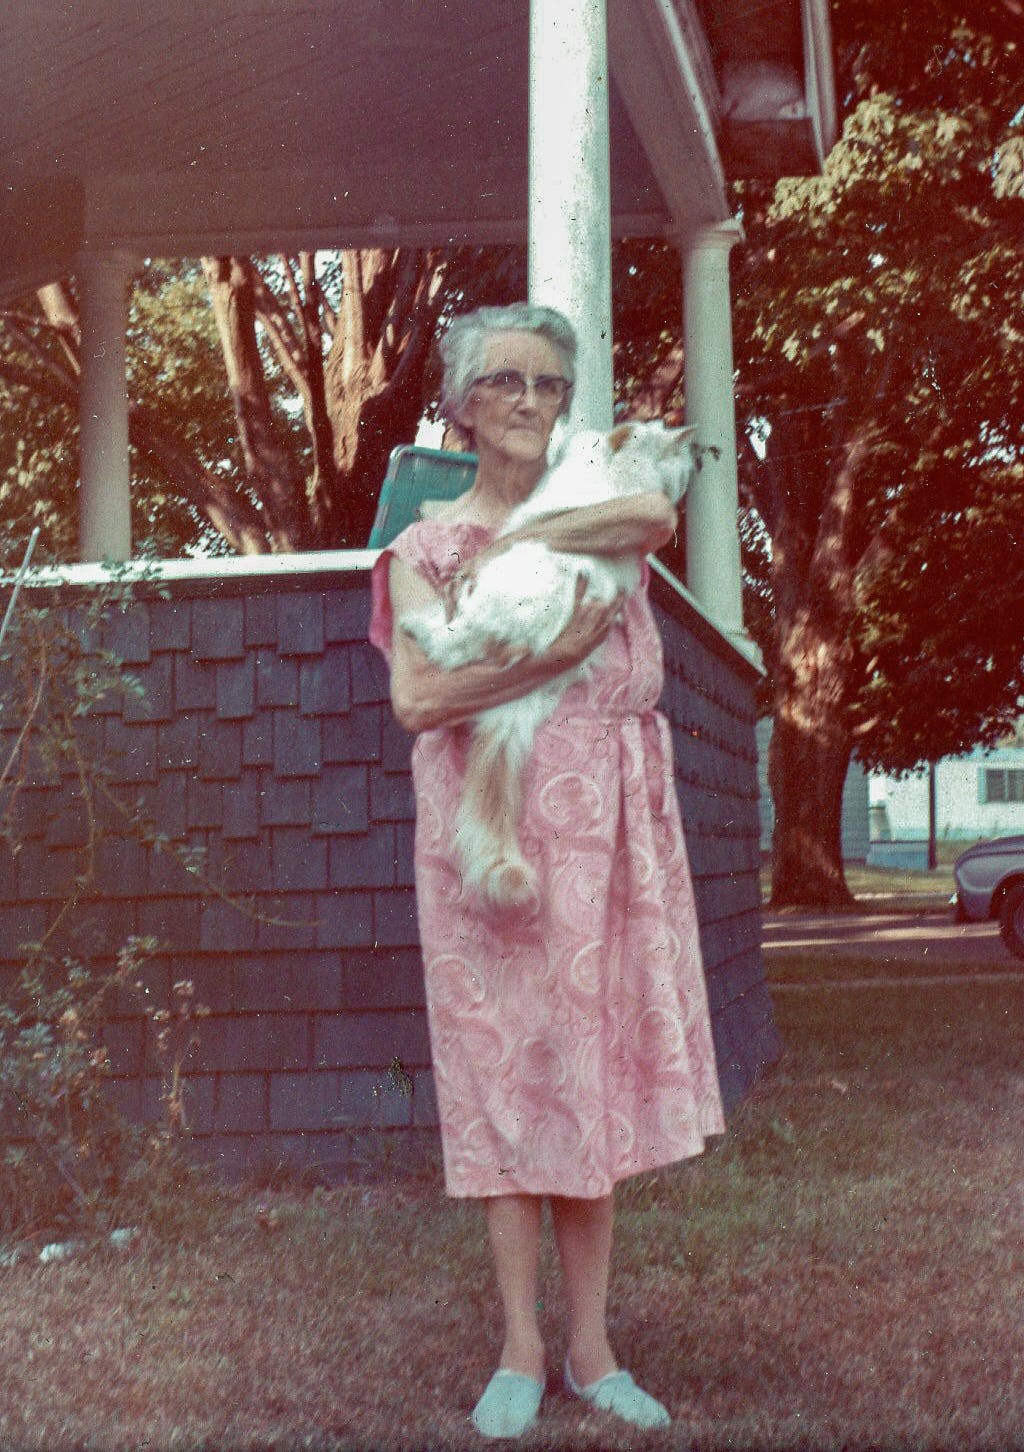 Ethel holding her cat